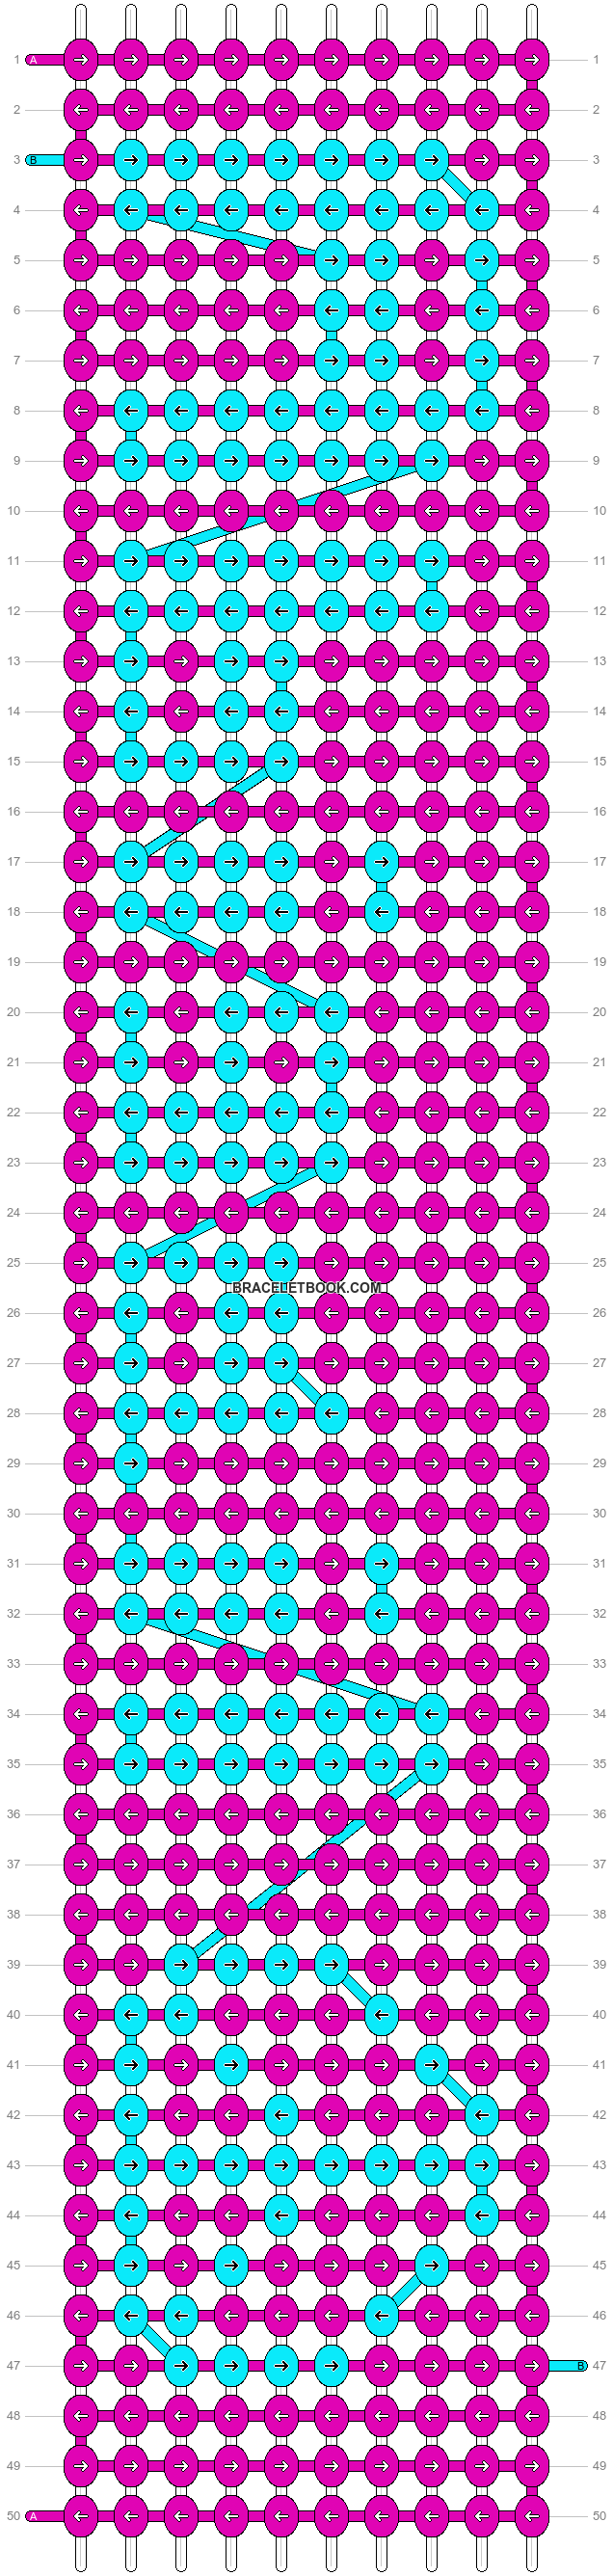 Alpha pattern #1904 pattern